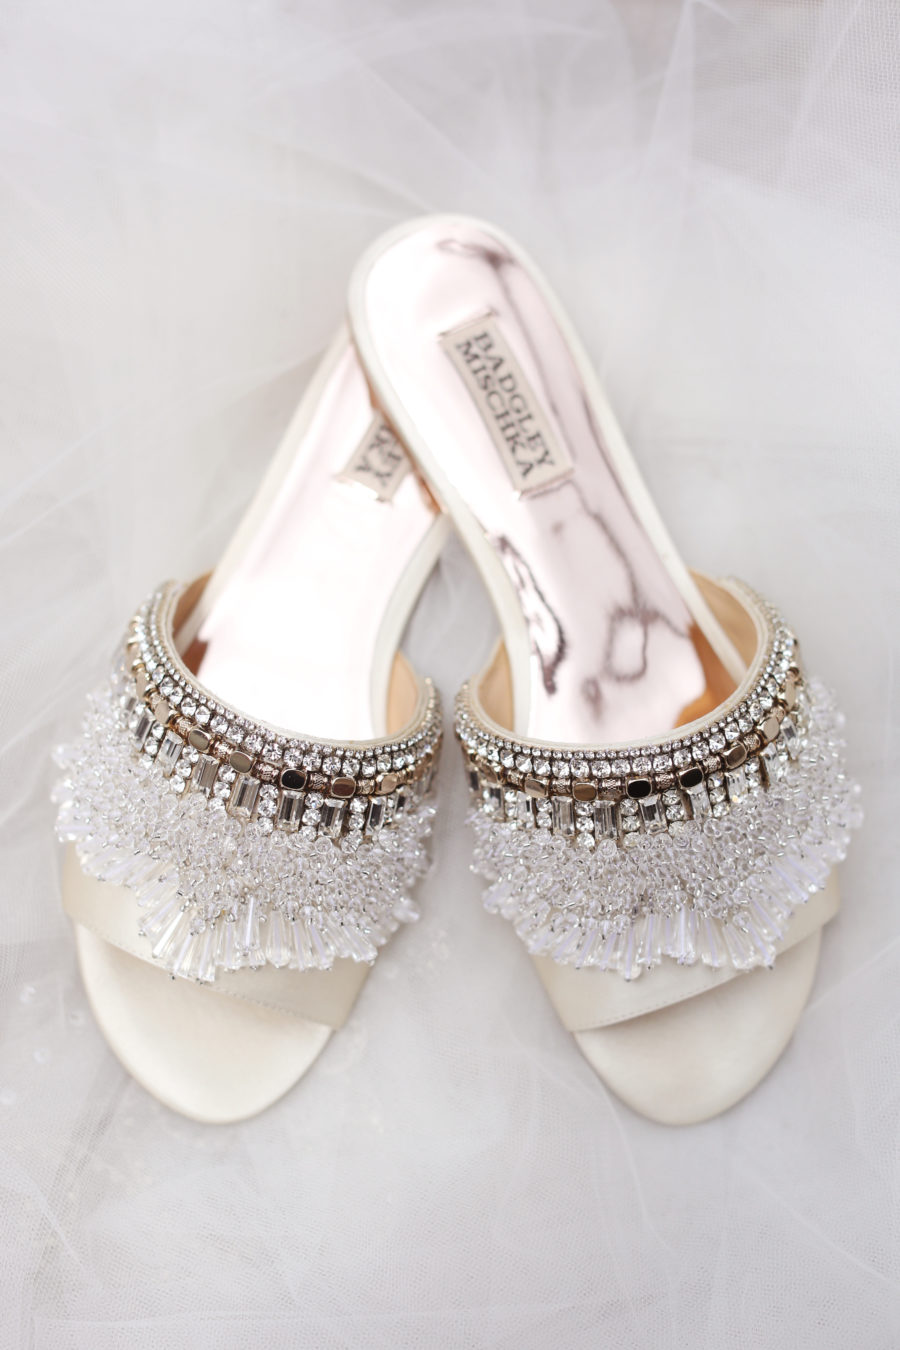 Badgley Mischka Bridal Shoes featured on Nashville Bride Guide